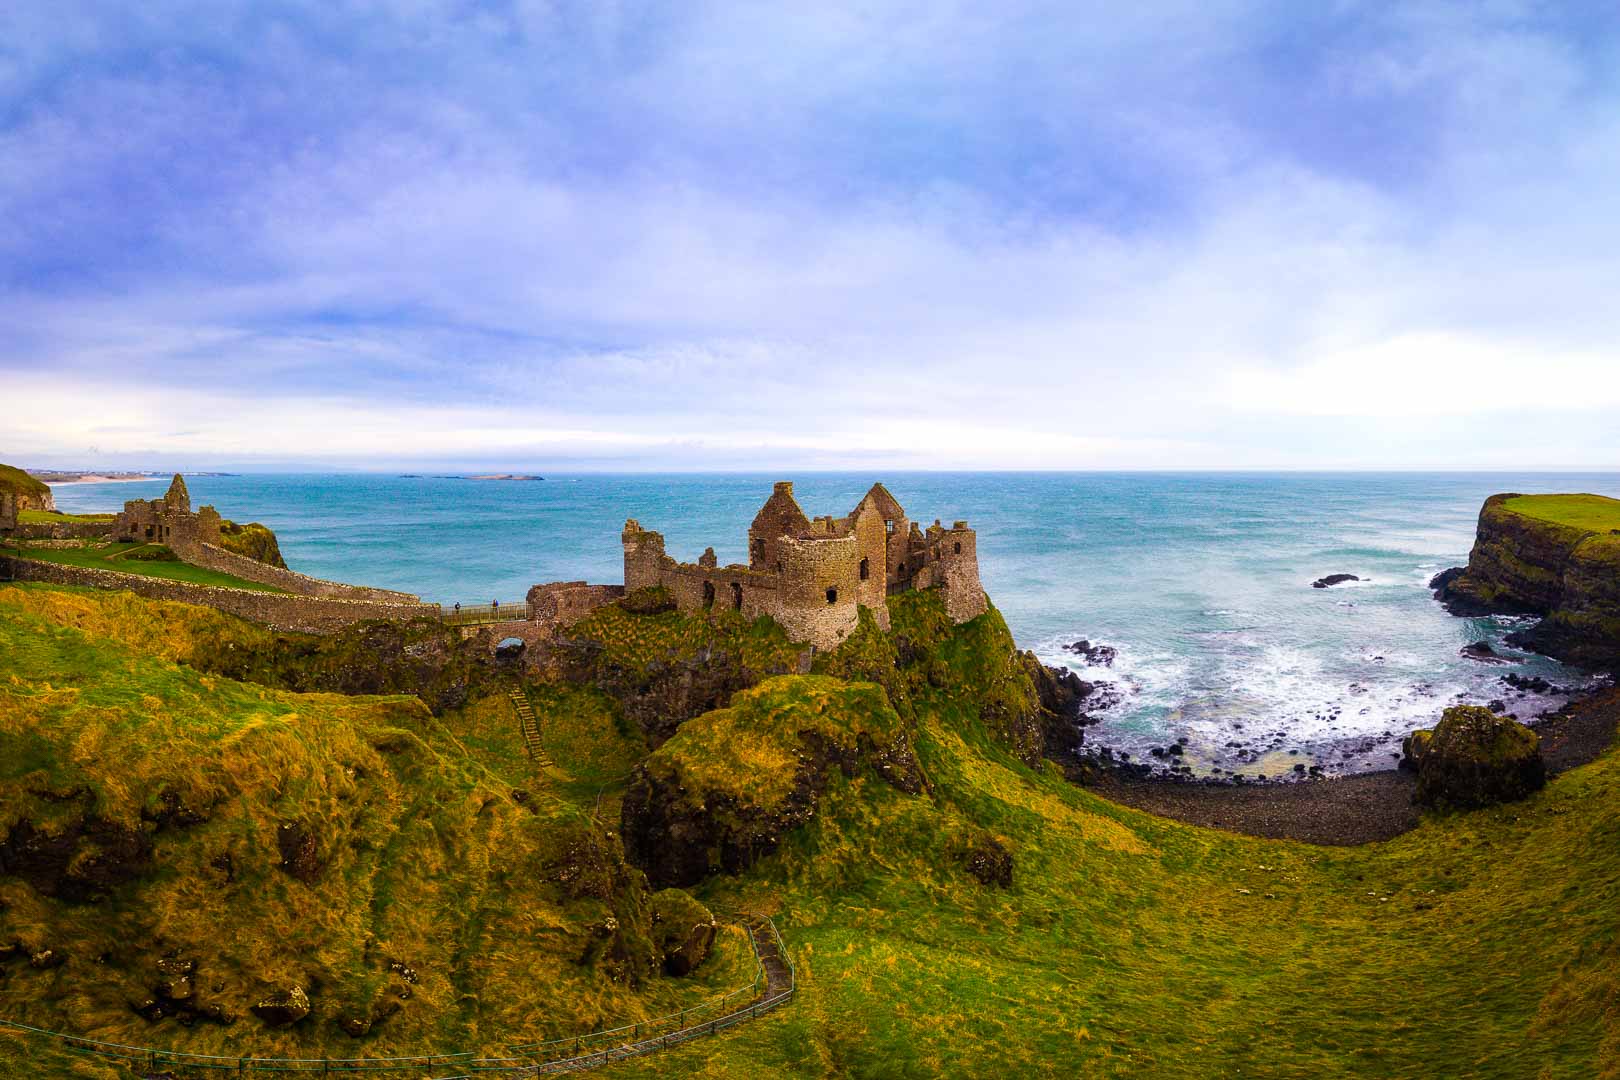 Dunluce Castle, Northern Ireland – Epic Medieval Castle on the Cliffs